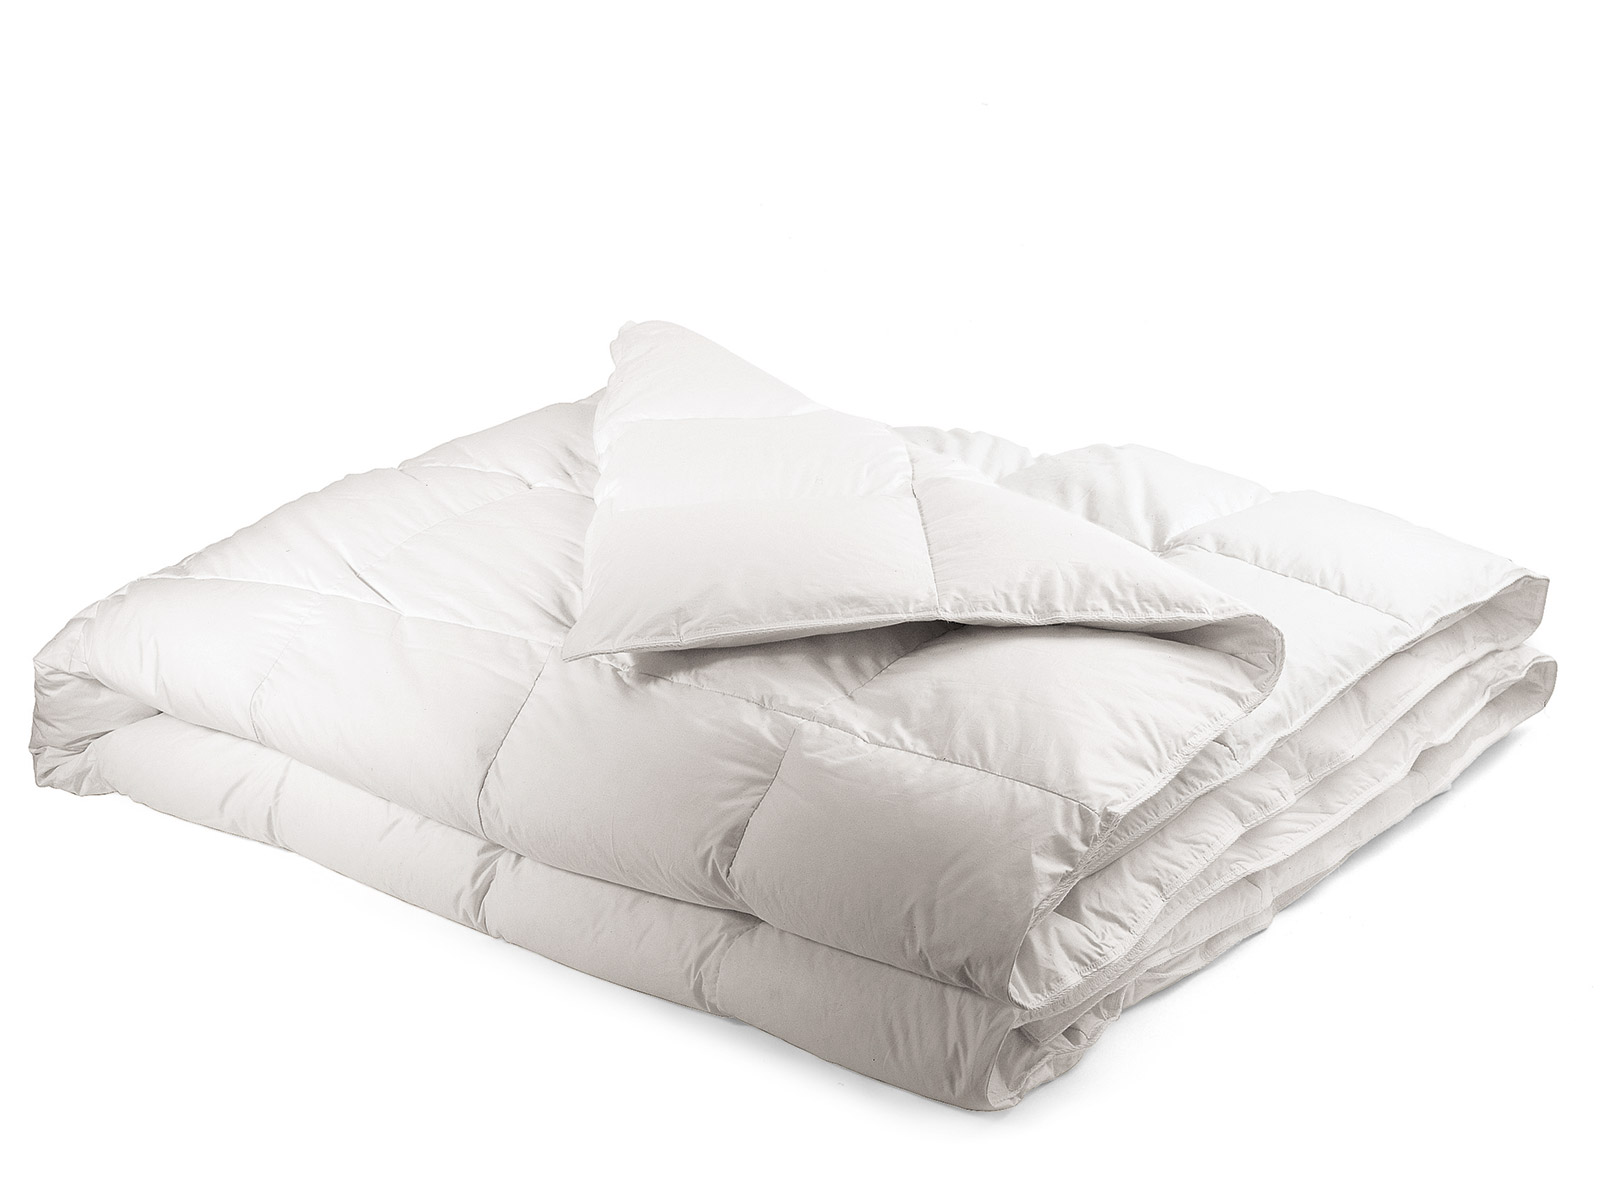 image of luxury down comforter